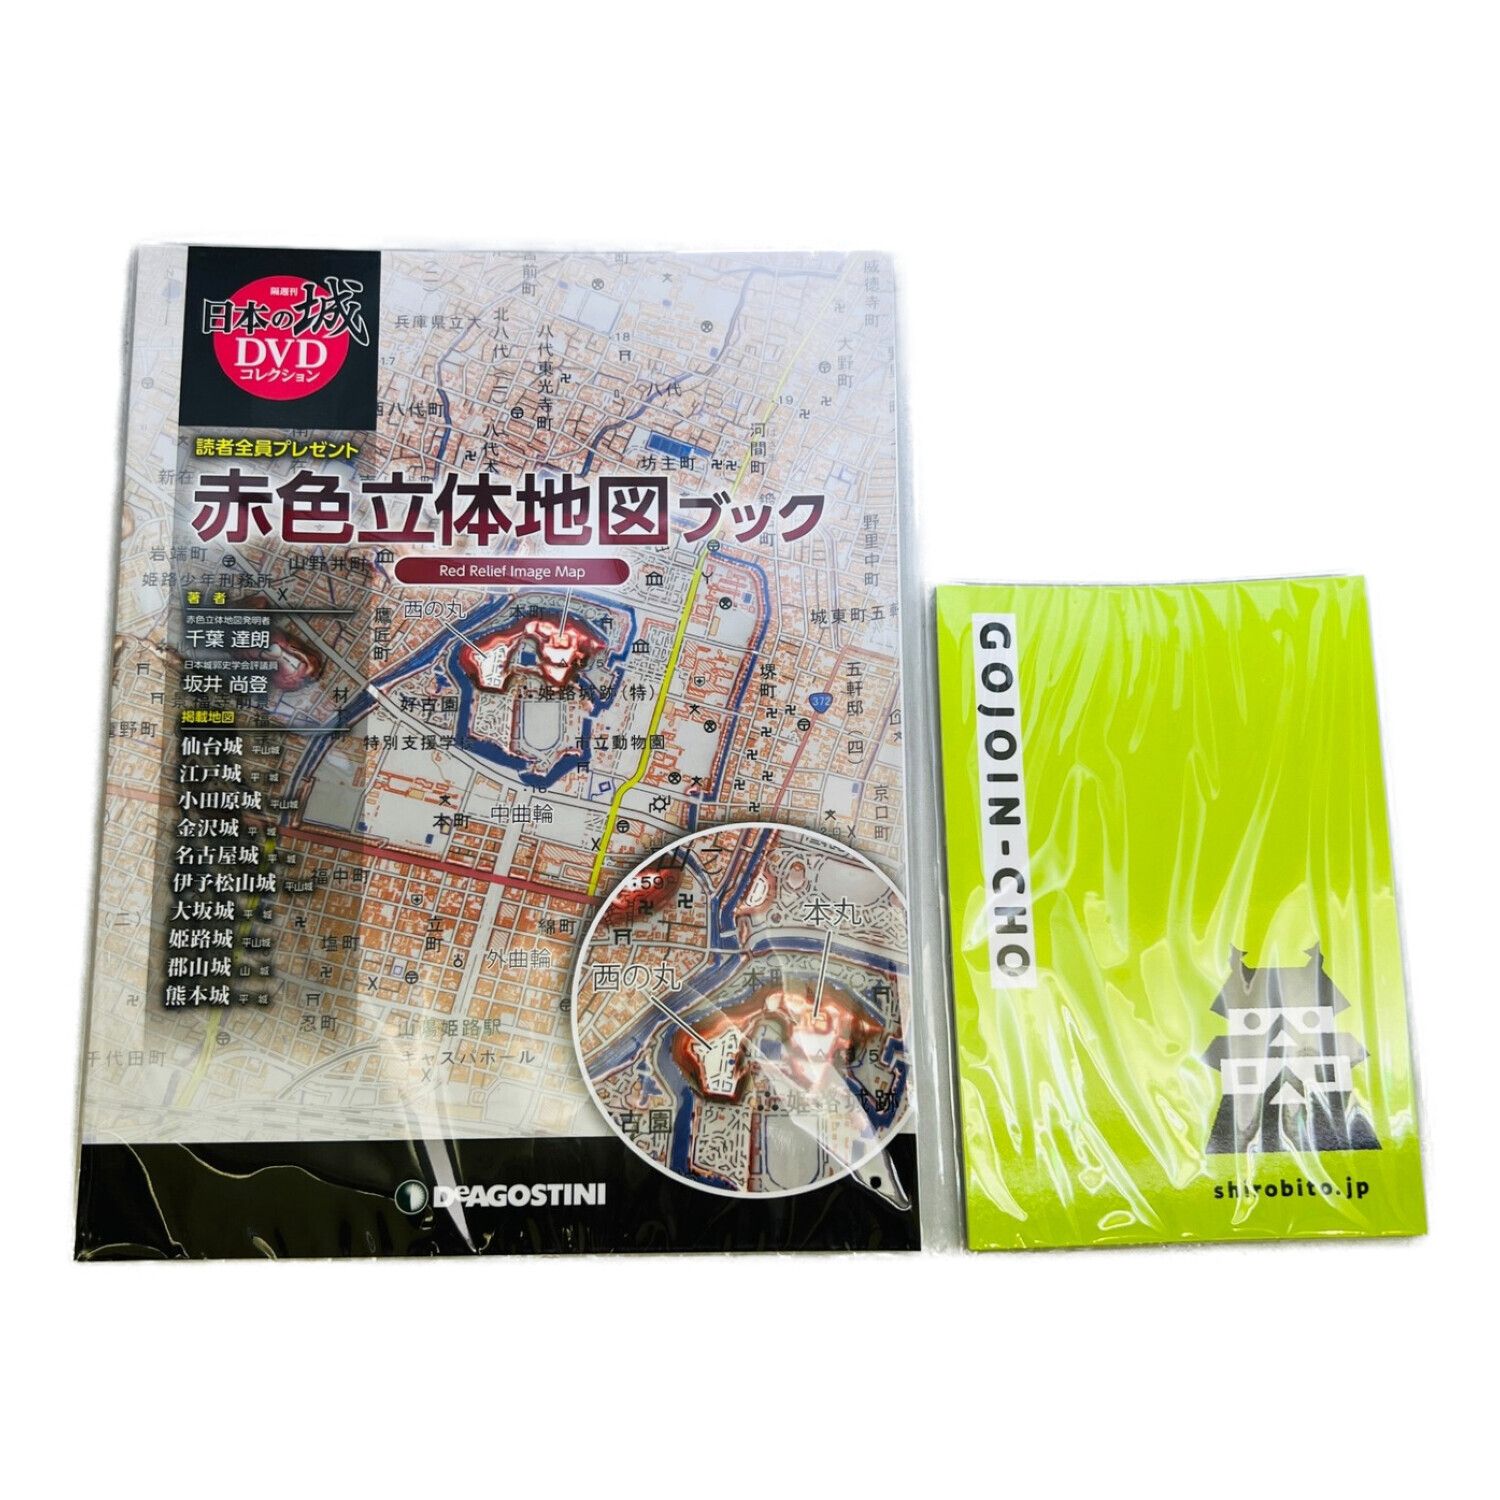 DeAGOSTINI (ディアゴスティーニ) DVDコレクション 日本の城 69